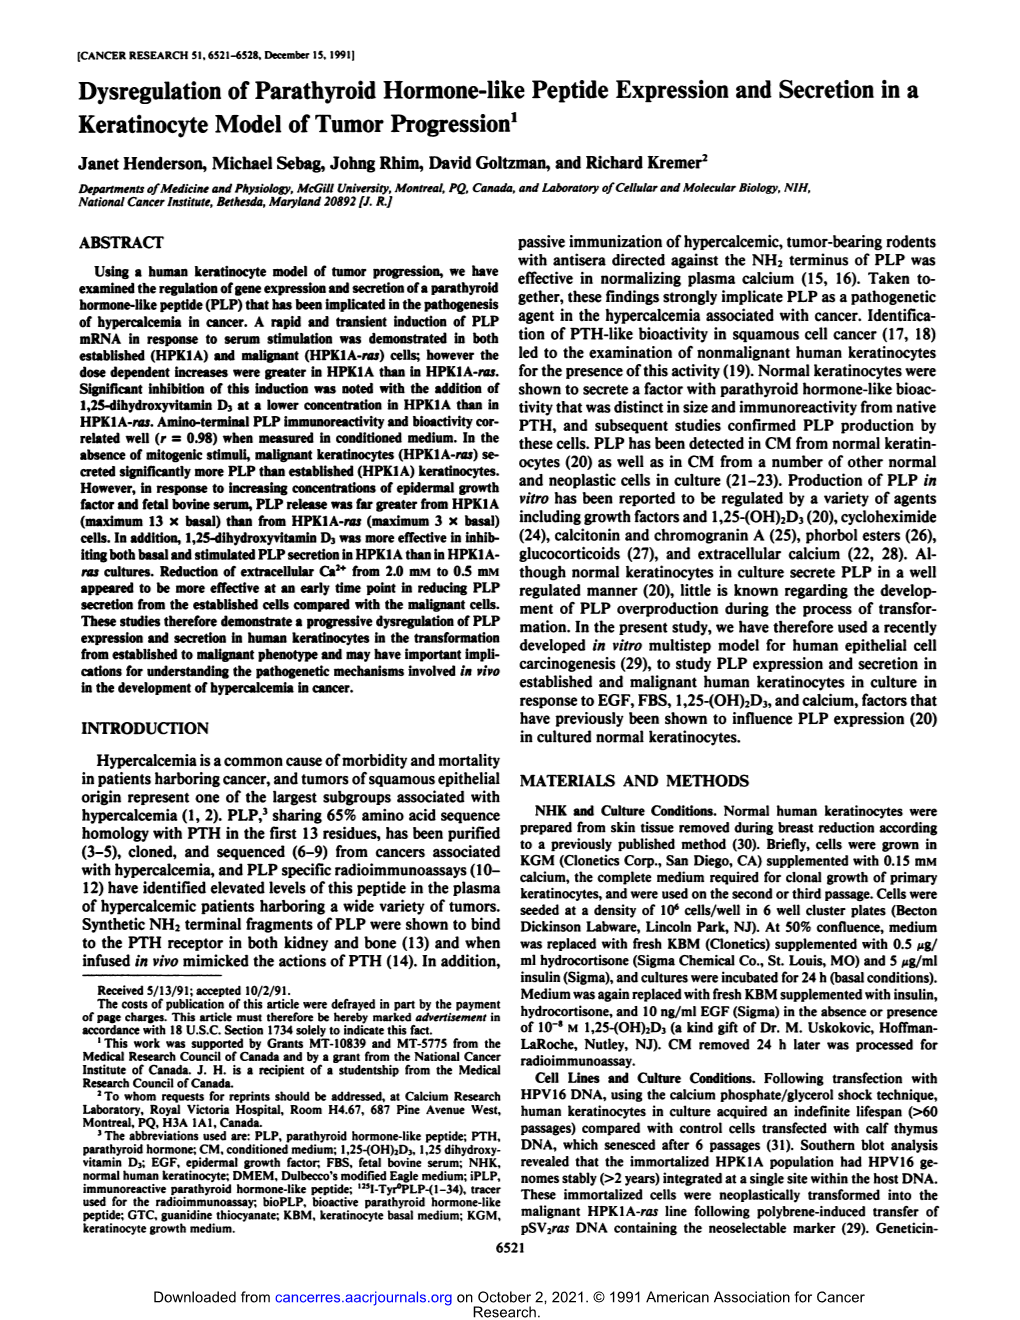 Dysregulation of Parathyroid Hormone-Like Peptide Expression and Secretion in a Keratinocyte Model of Tumor Progression1